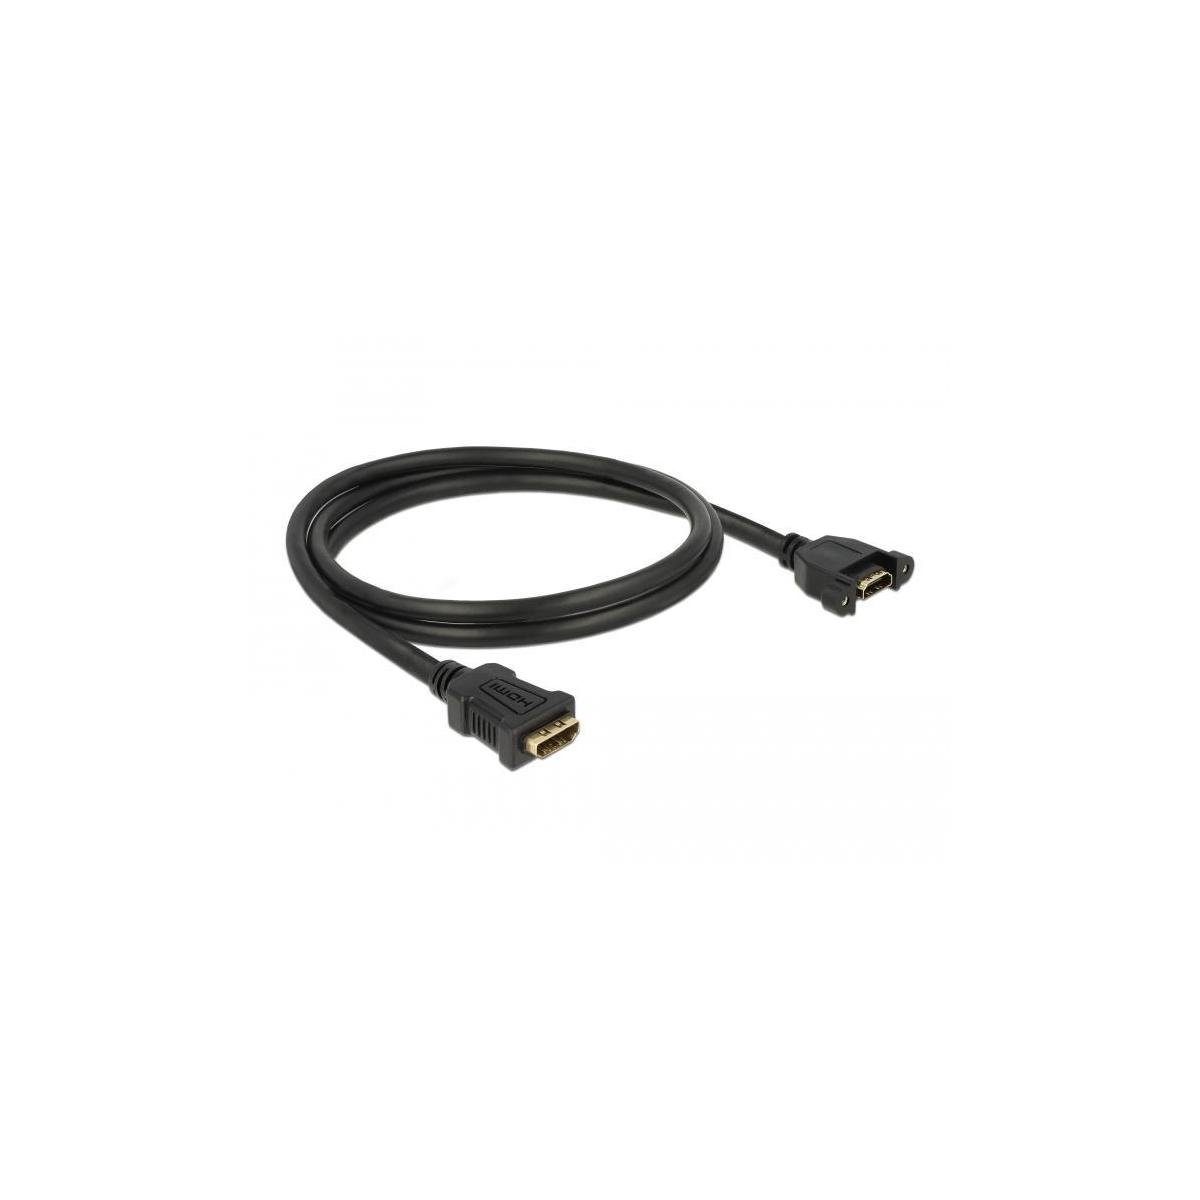 4K 1 (100,00 cm) Delock m Buchse > HDMI zum HDMI-A HDMI-A, Computer-Kabel, Kabel Einbau Buchse Hz, HDMI-A 30